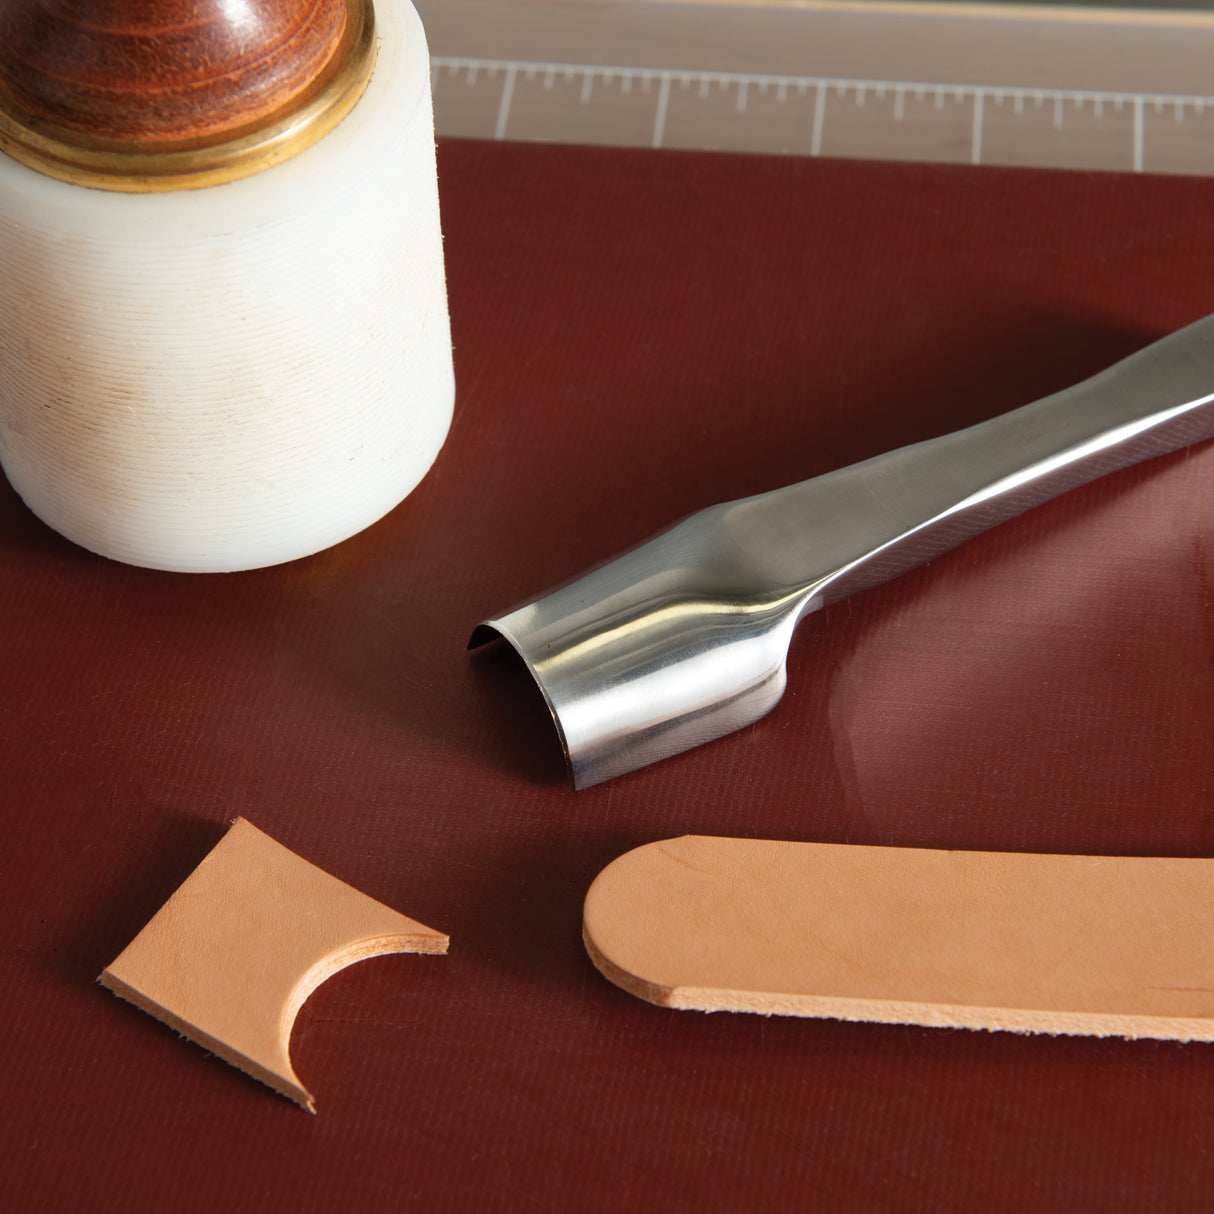 WUTA Professional Sharp Leather Strap String Belt Cutter